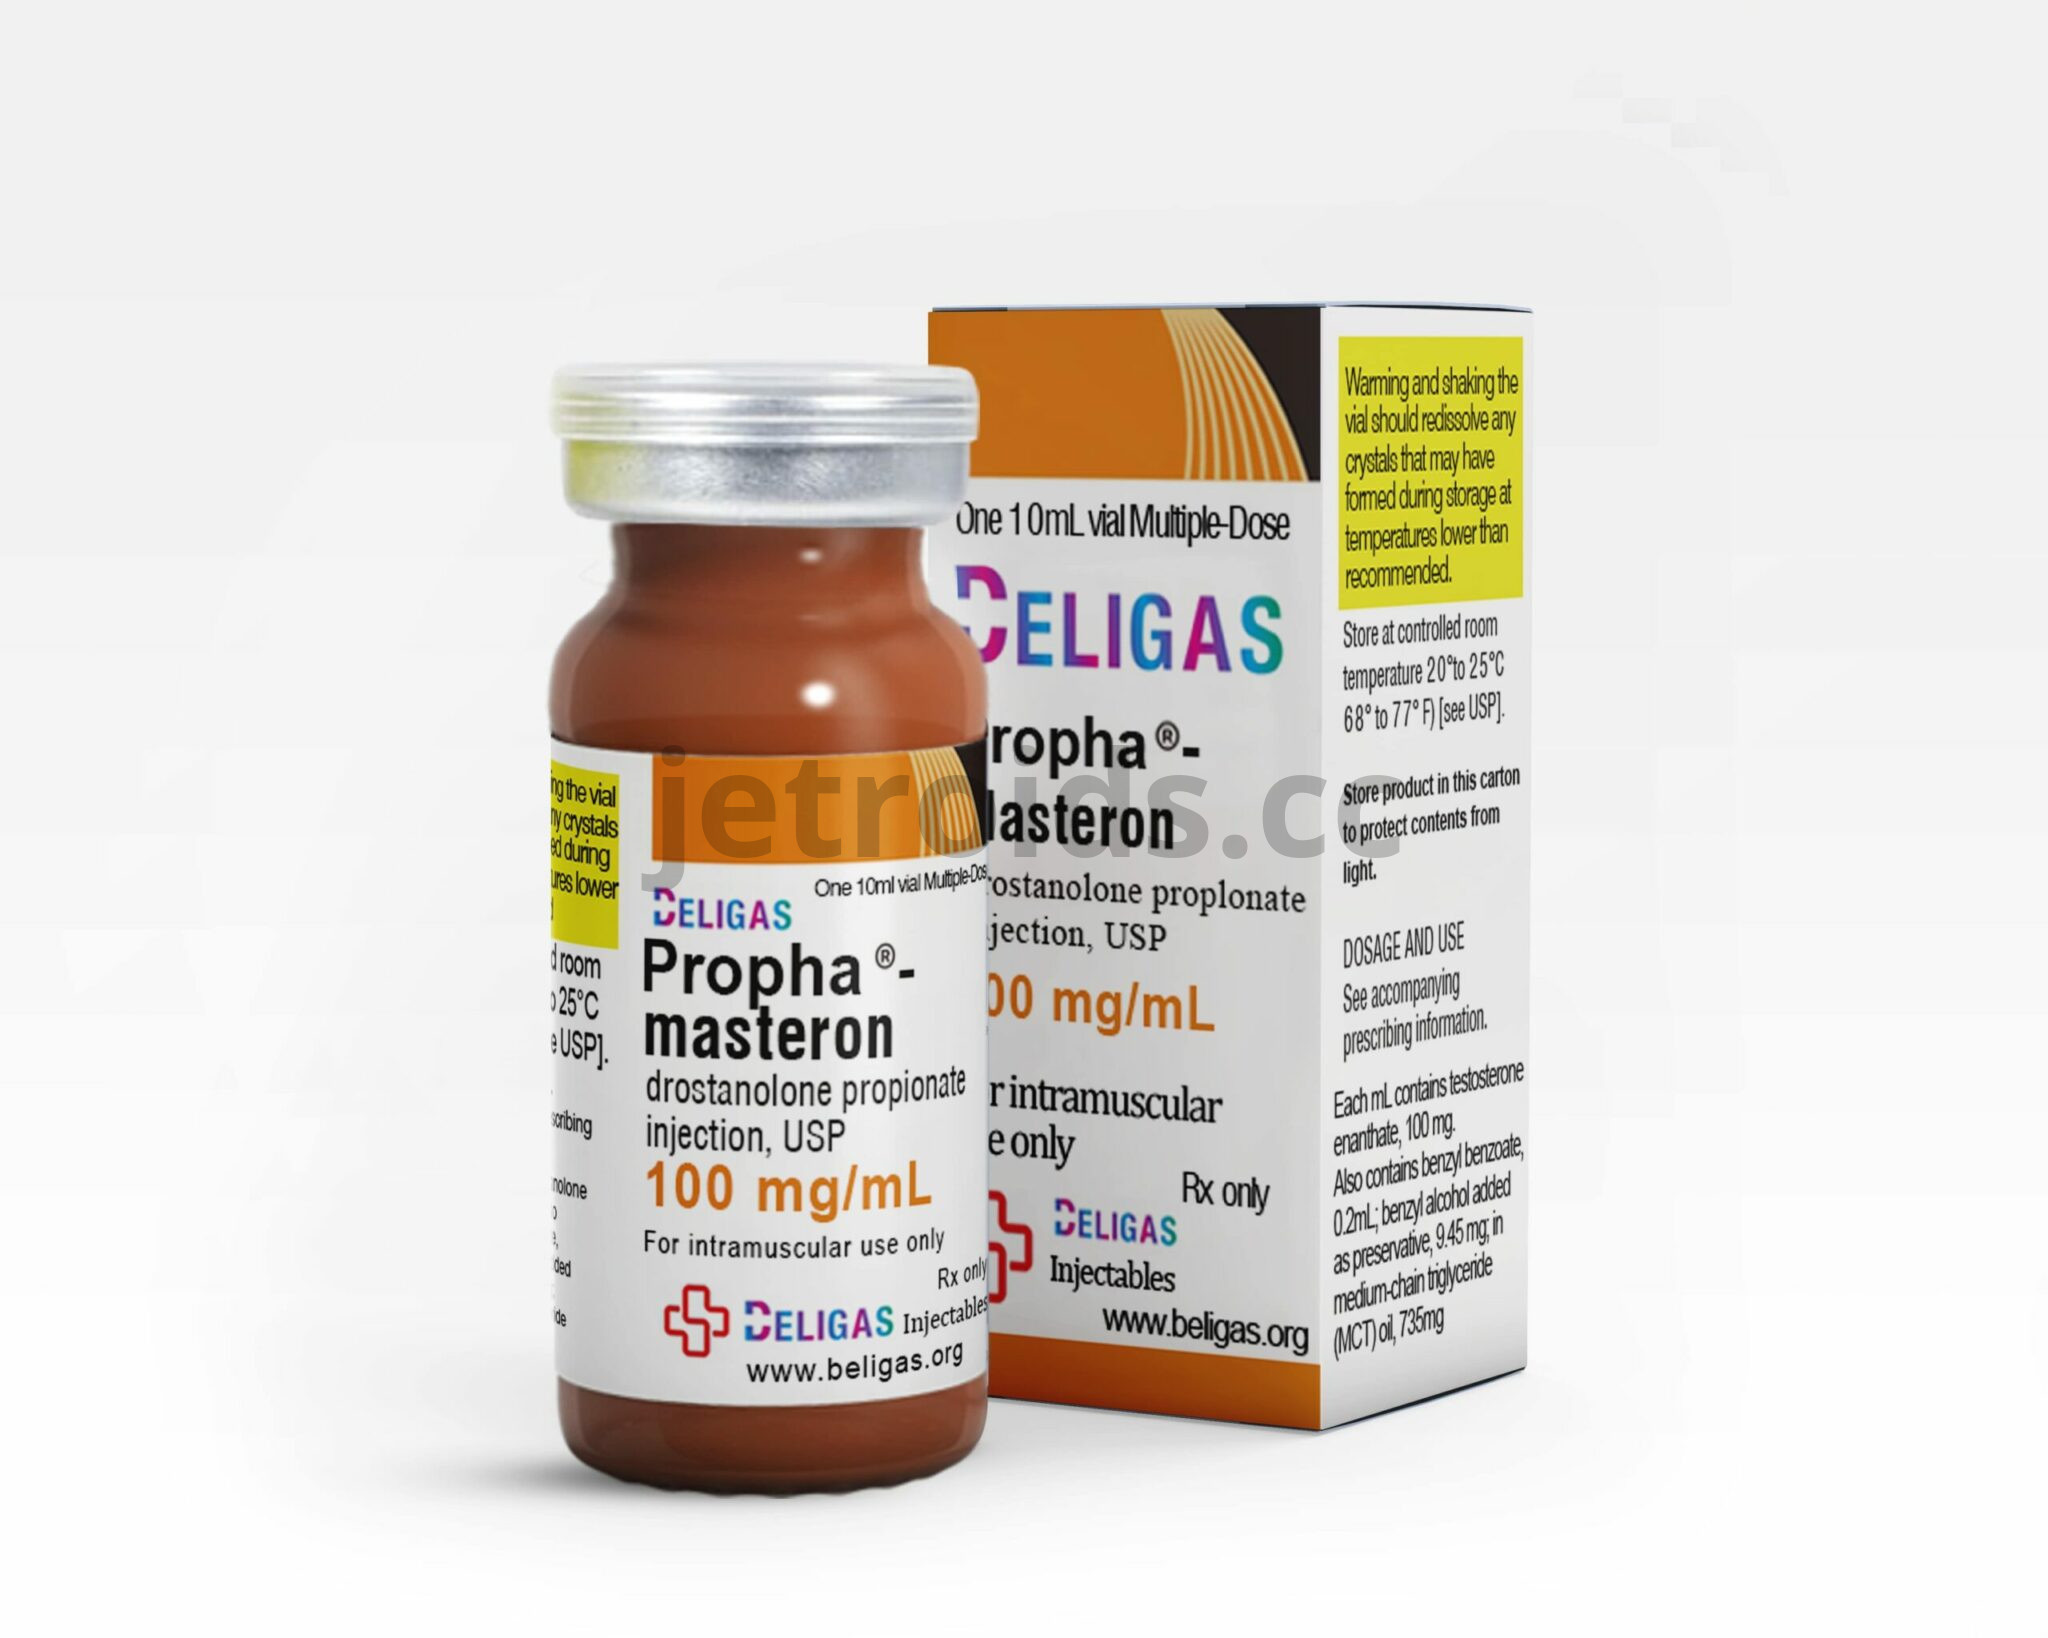 Beligas Pharma Propha - Masteron 100mg/ml Product Info